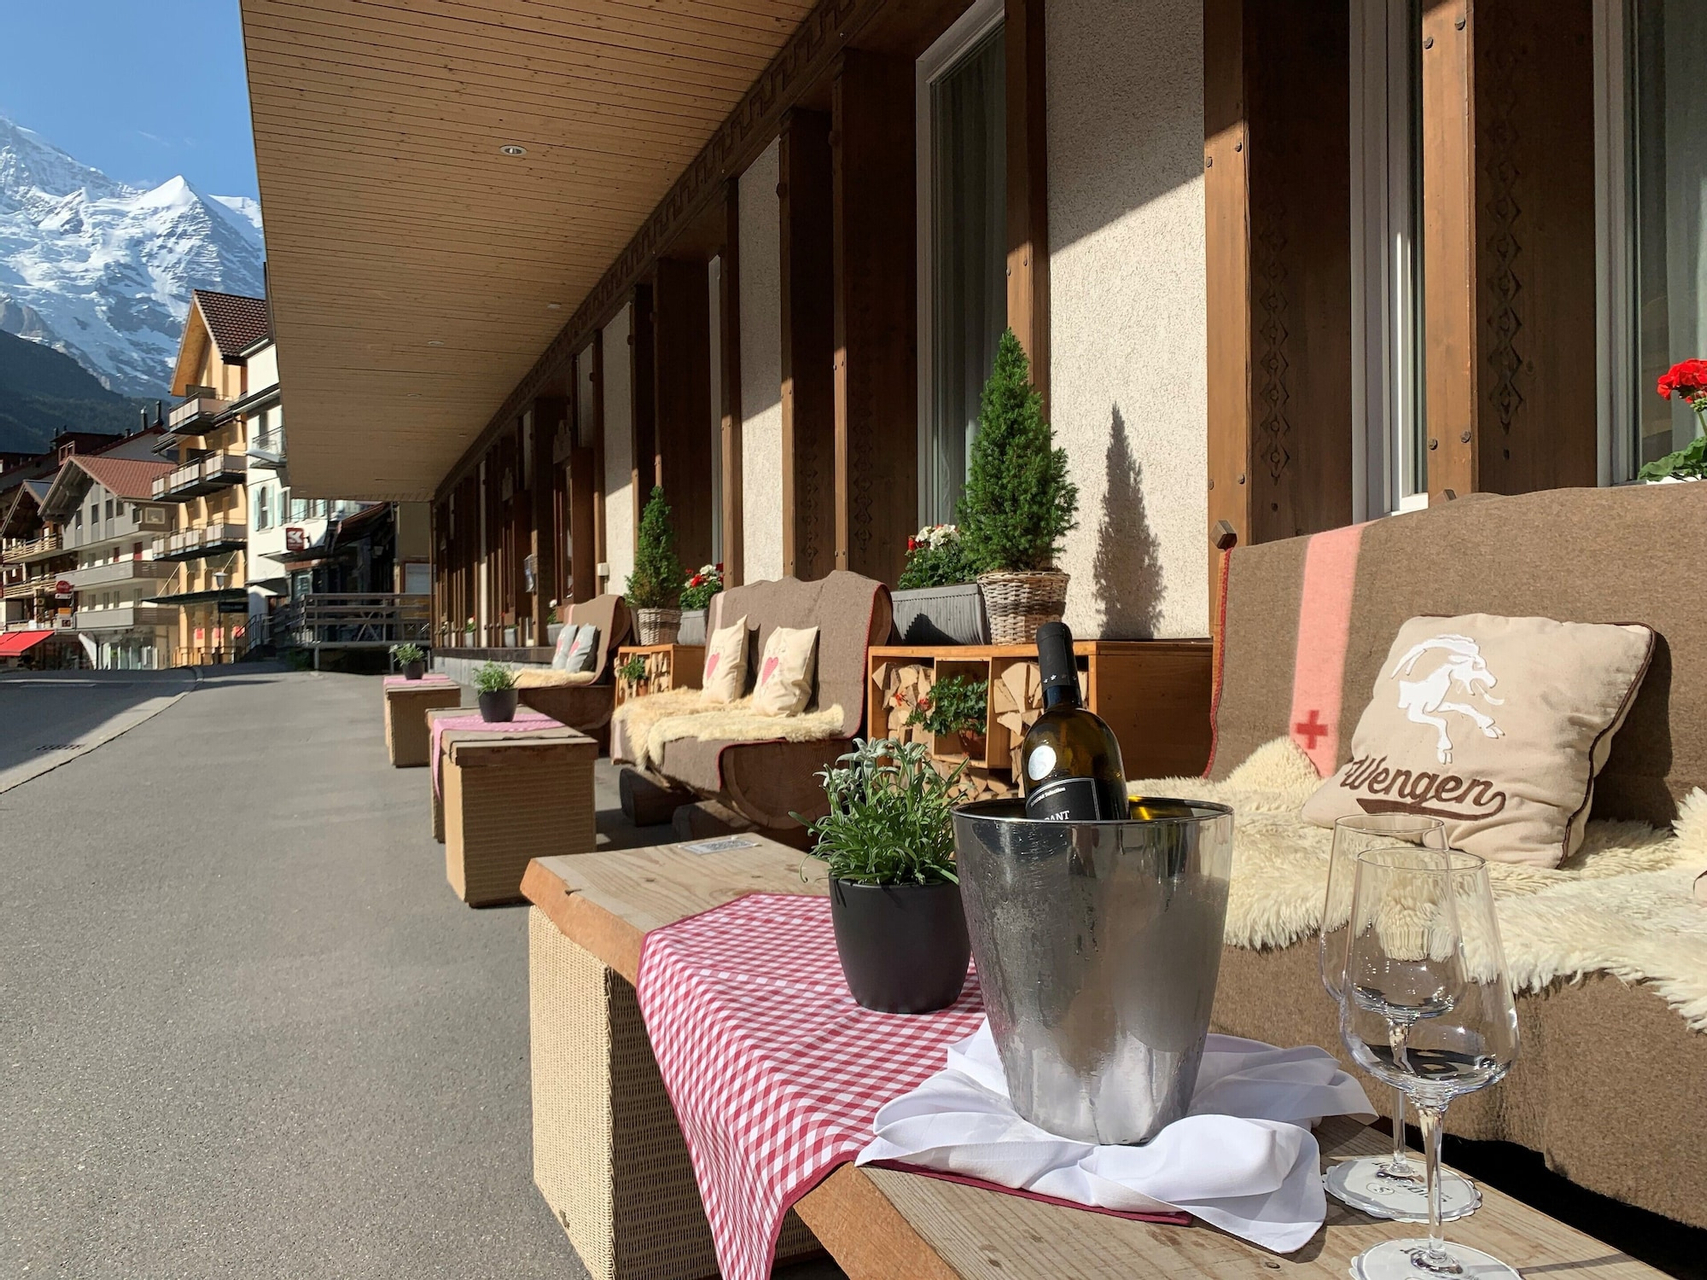 Food & Drinks, Sunstar Hotel Wengen, Interlaken